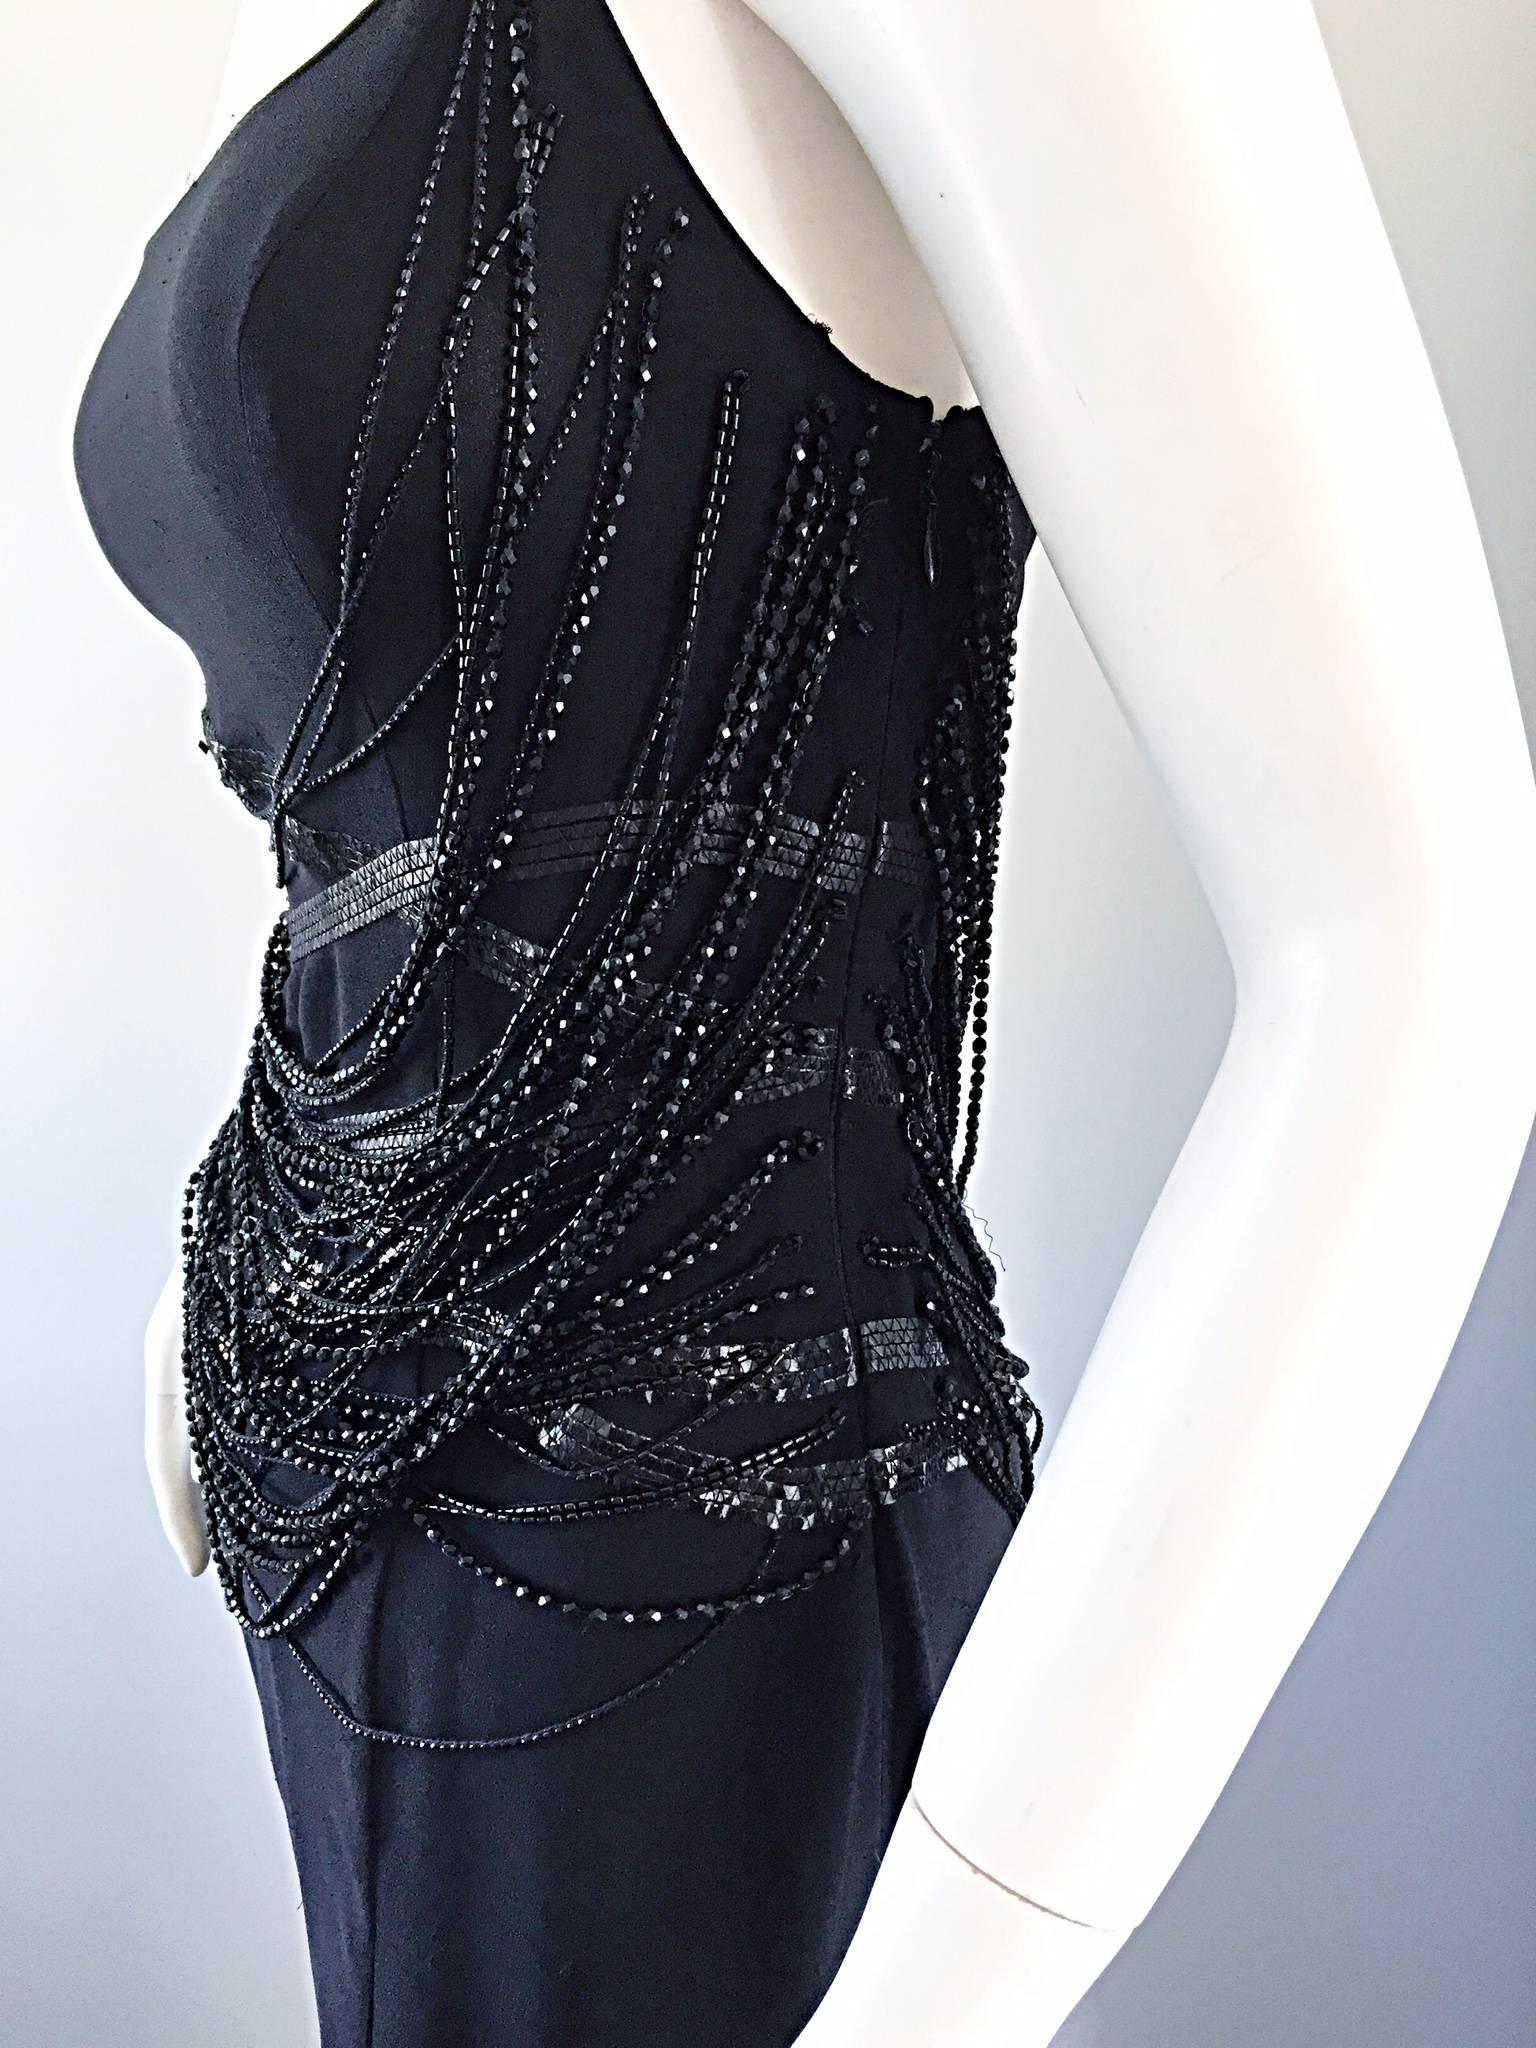 Gai Mattiolo Couture ' Spiderweb ' Intricately Beaded Silk Dress 2